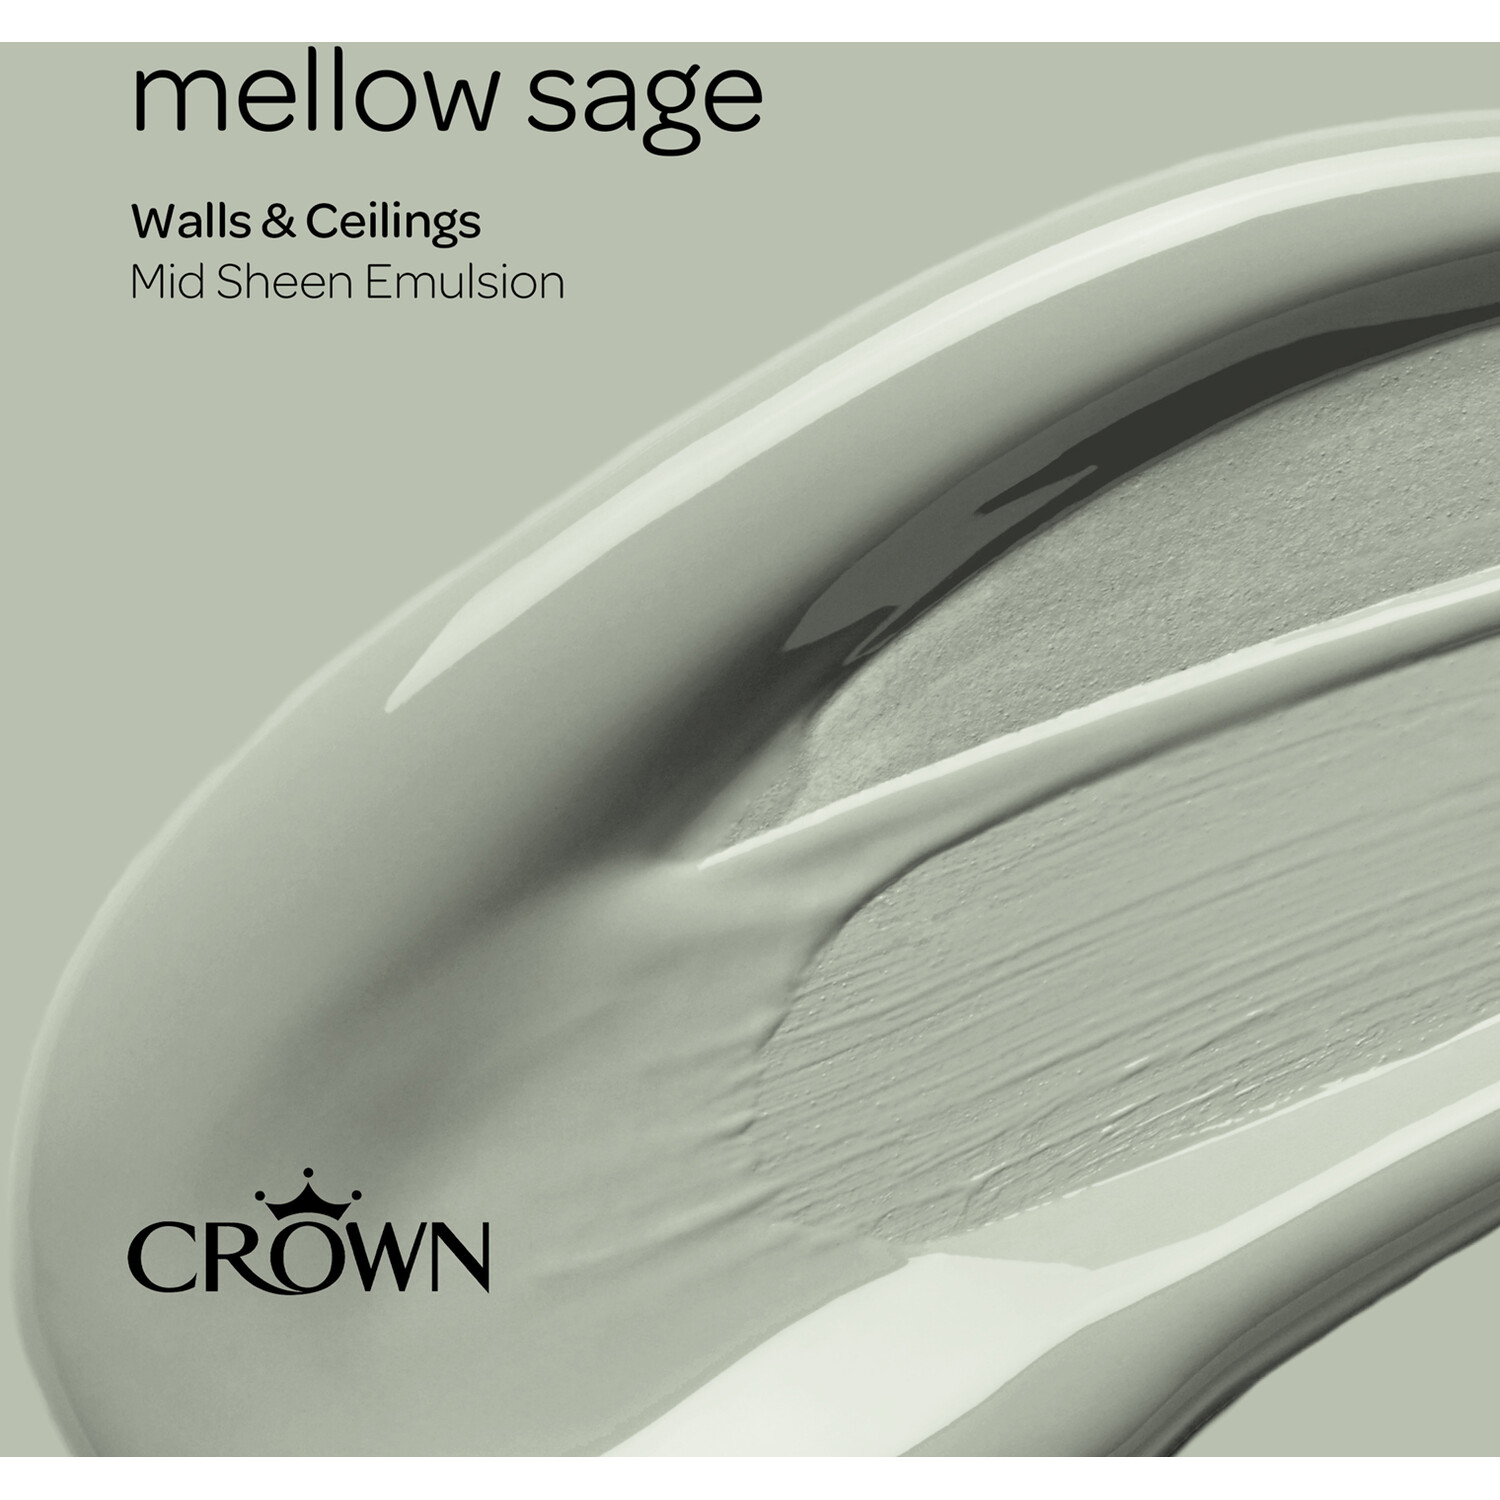 Crown Walls & Ceilings Mellow Sage Mid Sheen Emulsion Paint 2.5L Image 4